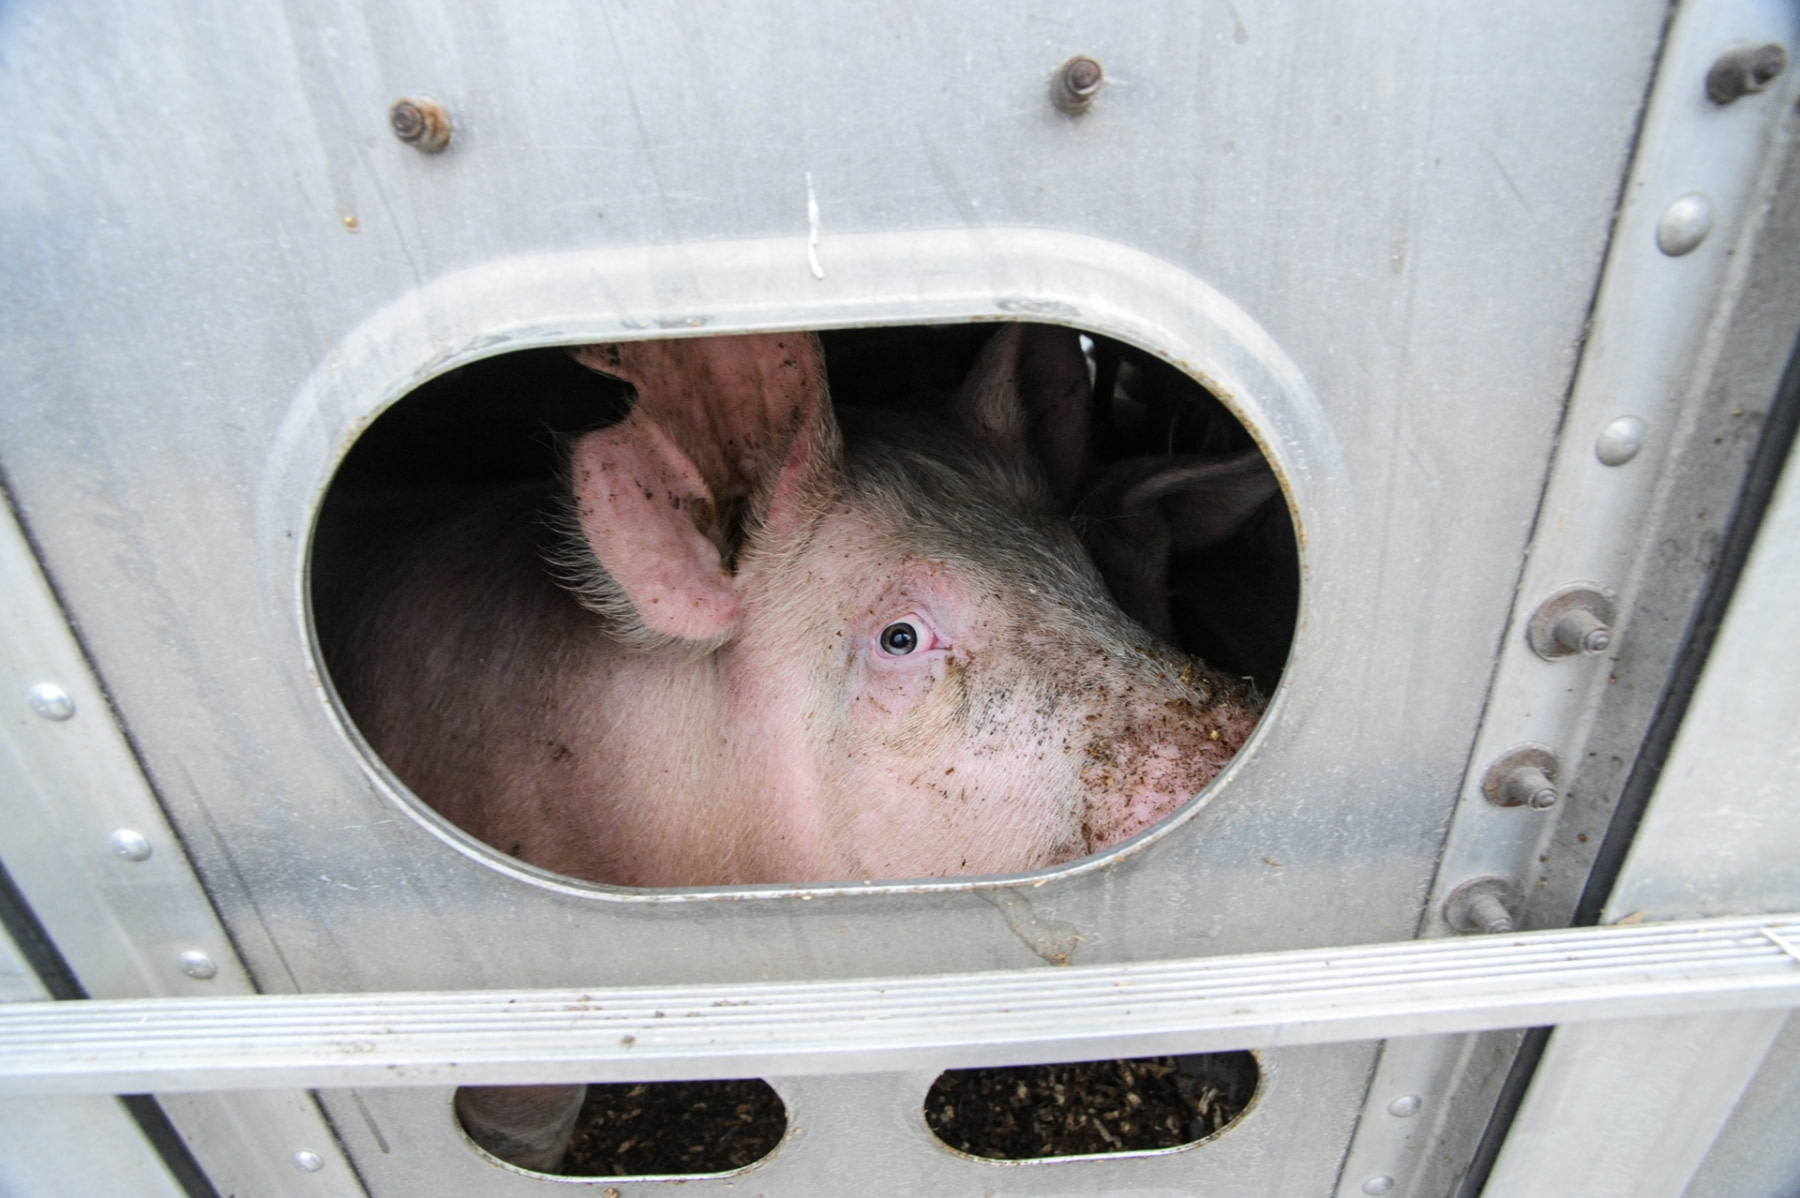 Toronto Pig Save Archives - We Animals Media